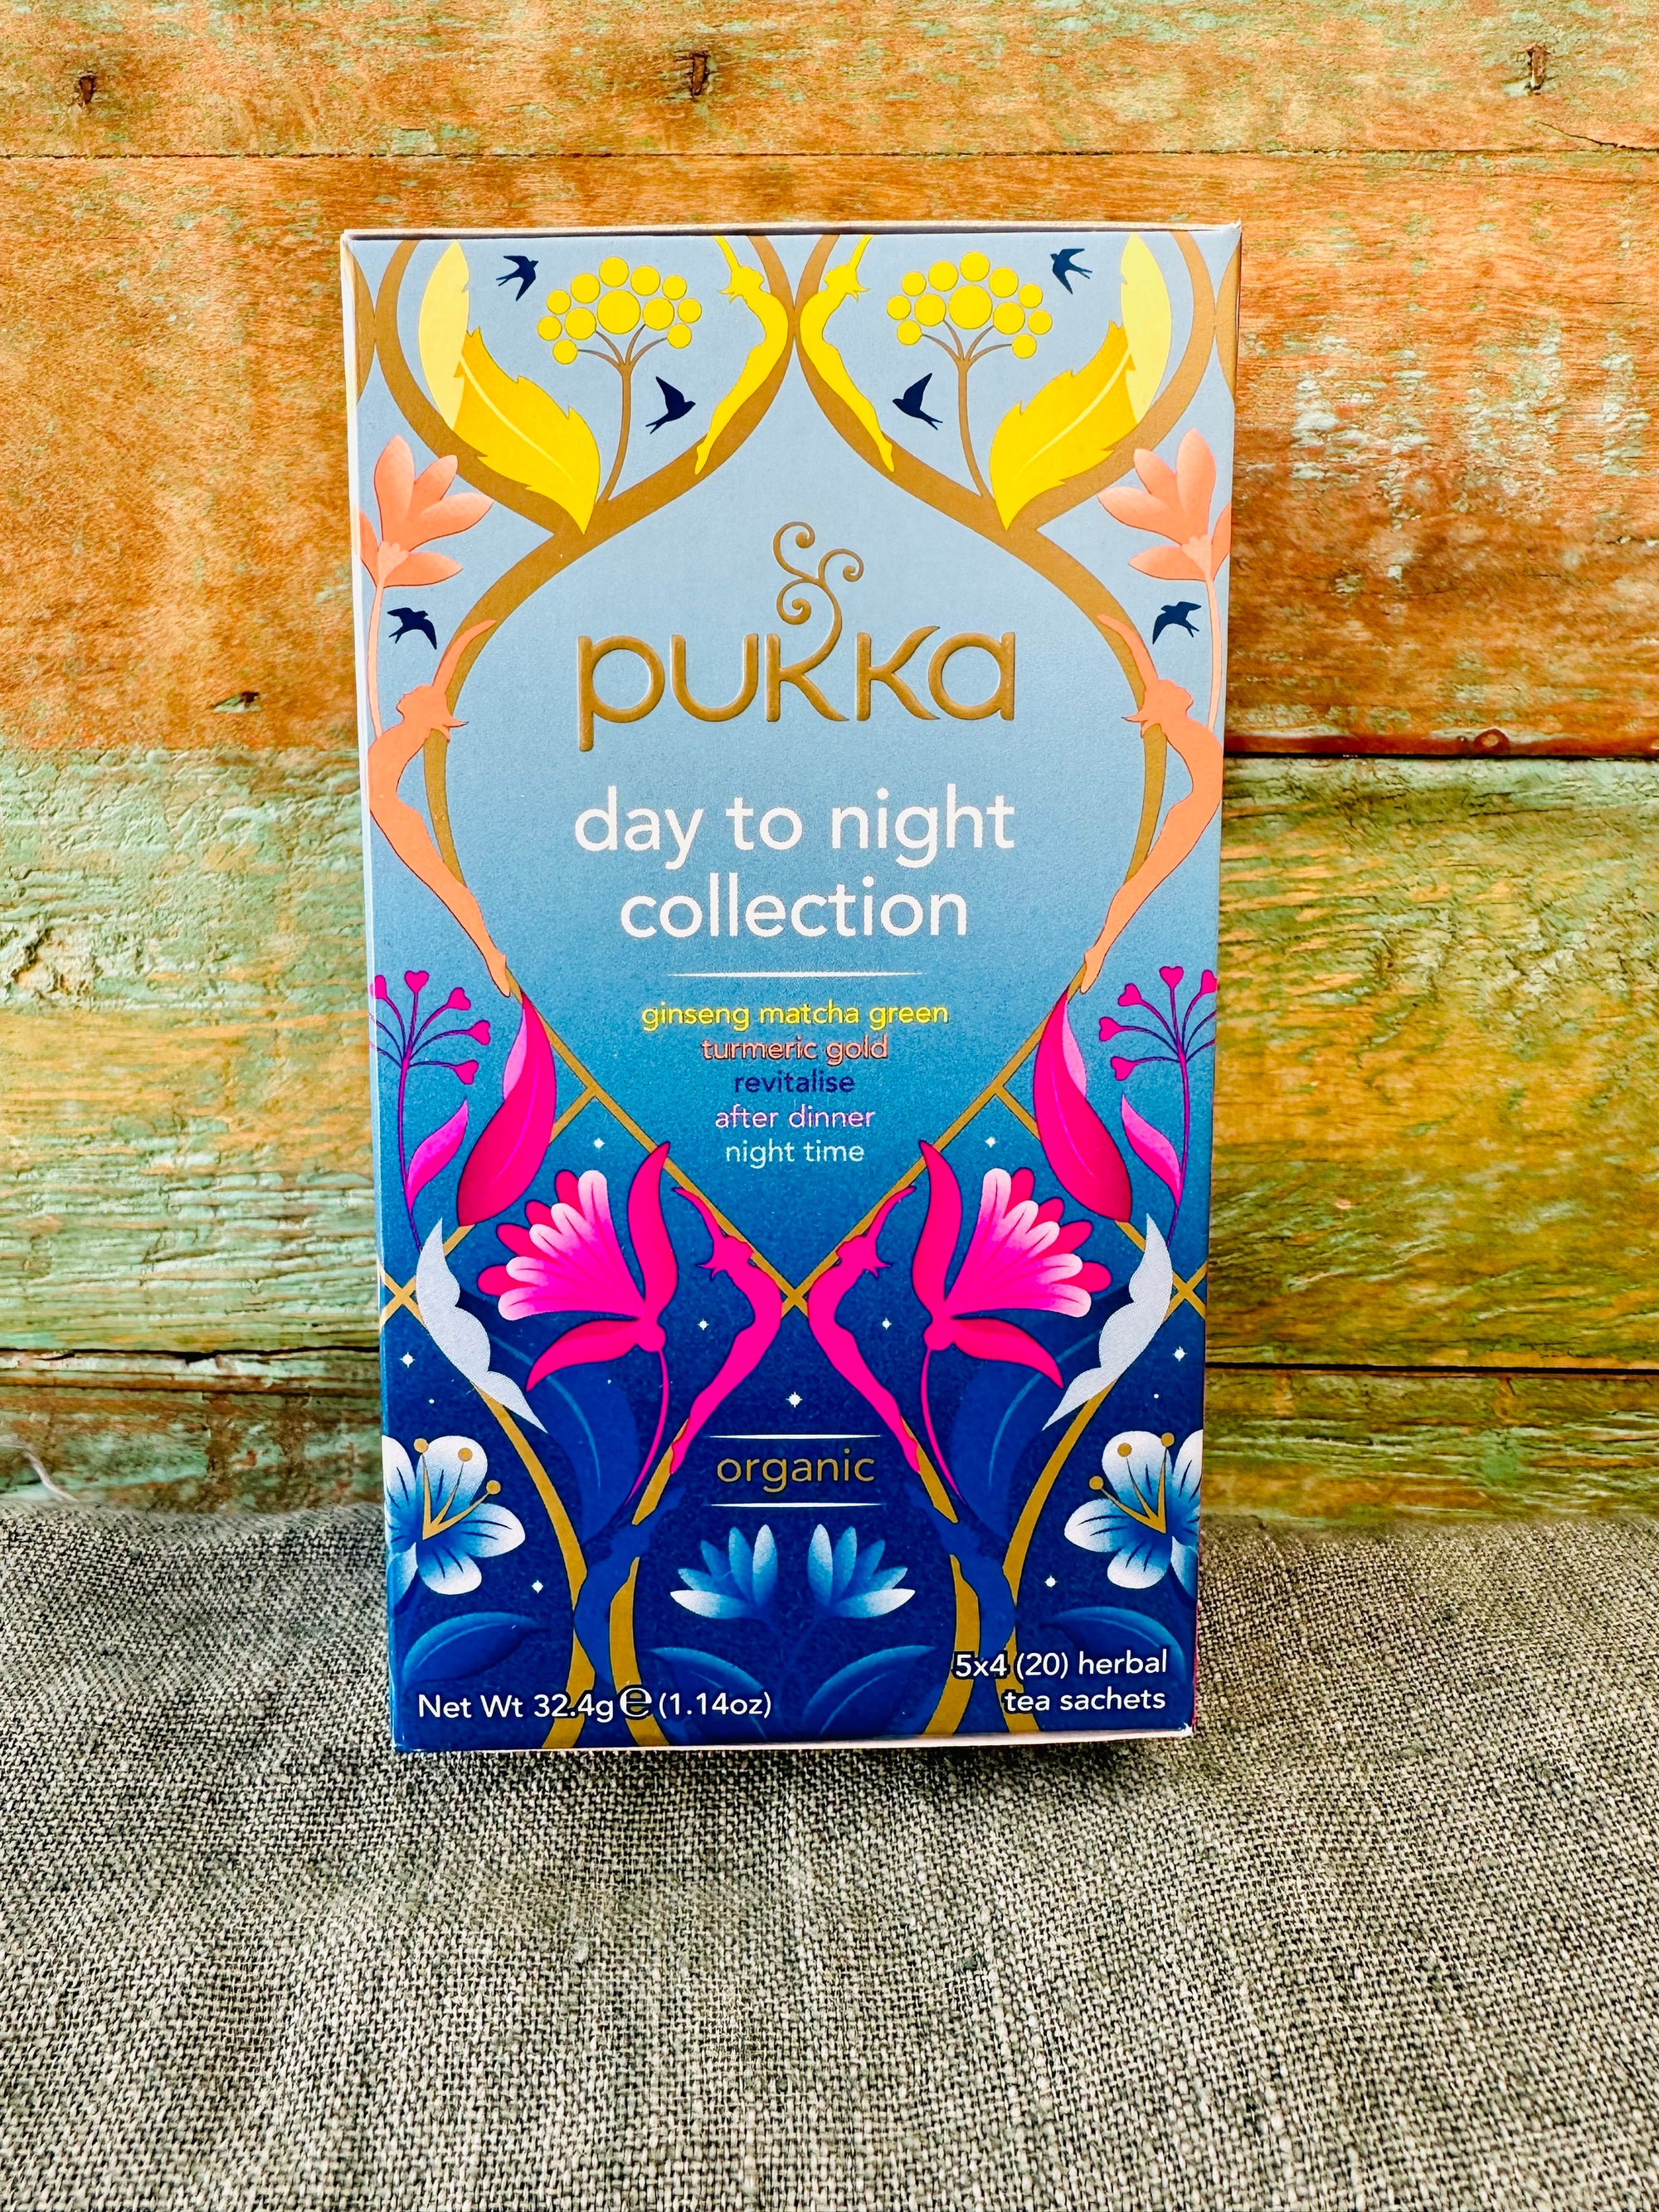 Pukka Tea - Day to Night Collection